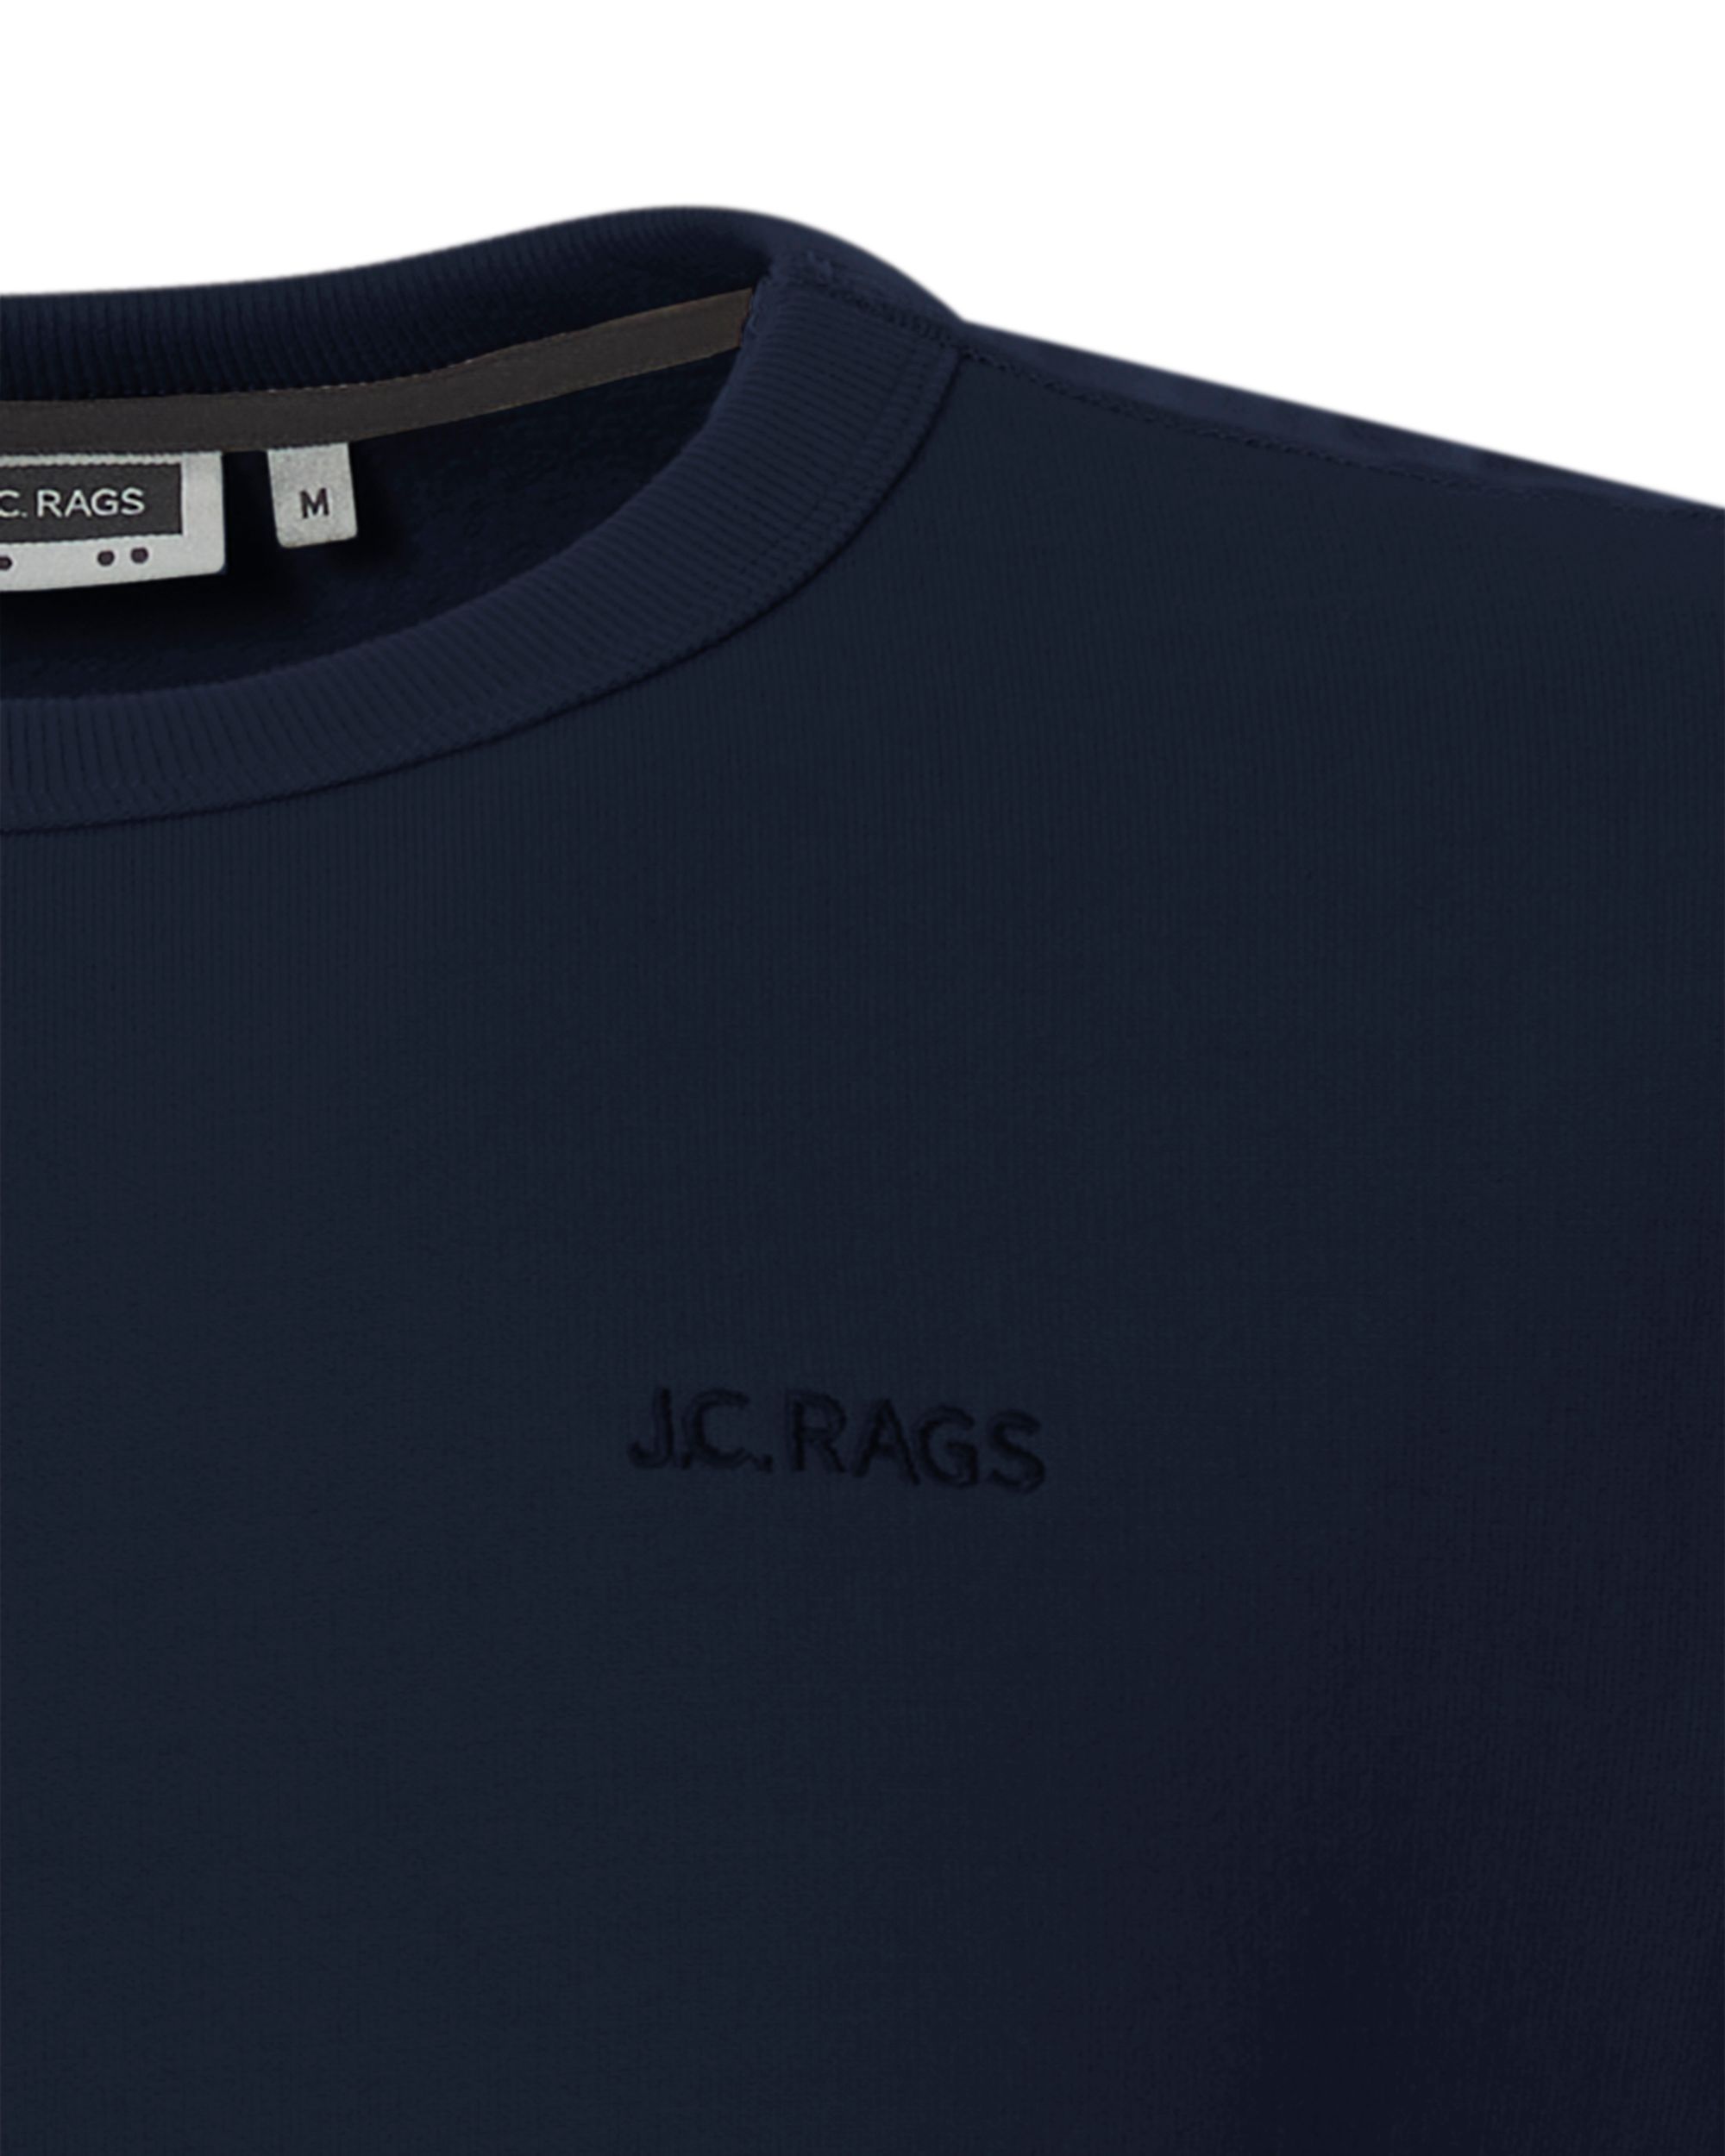 J.C. RAGS Jordan Sweater Navy uni 073069-002-L